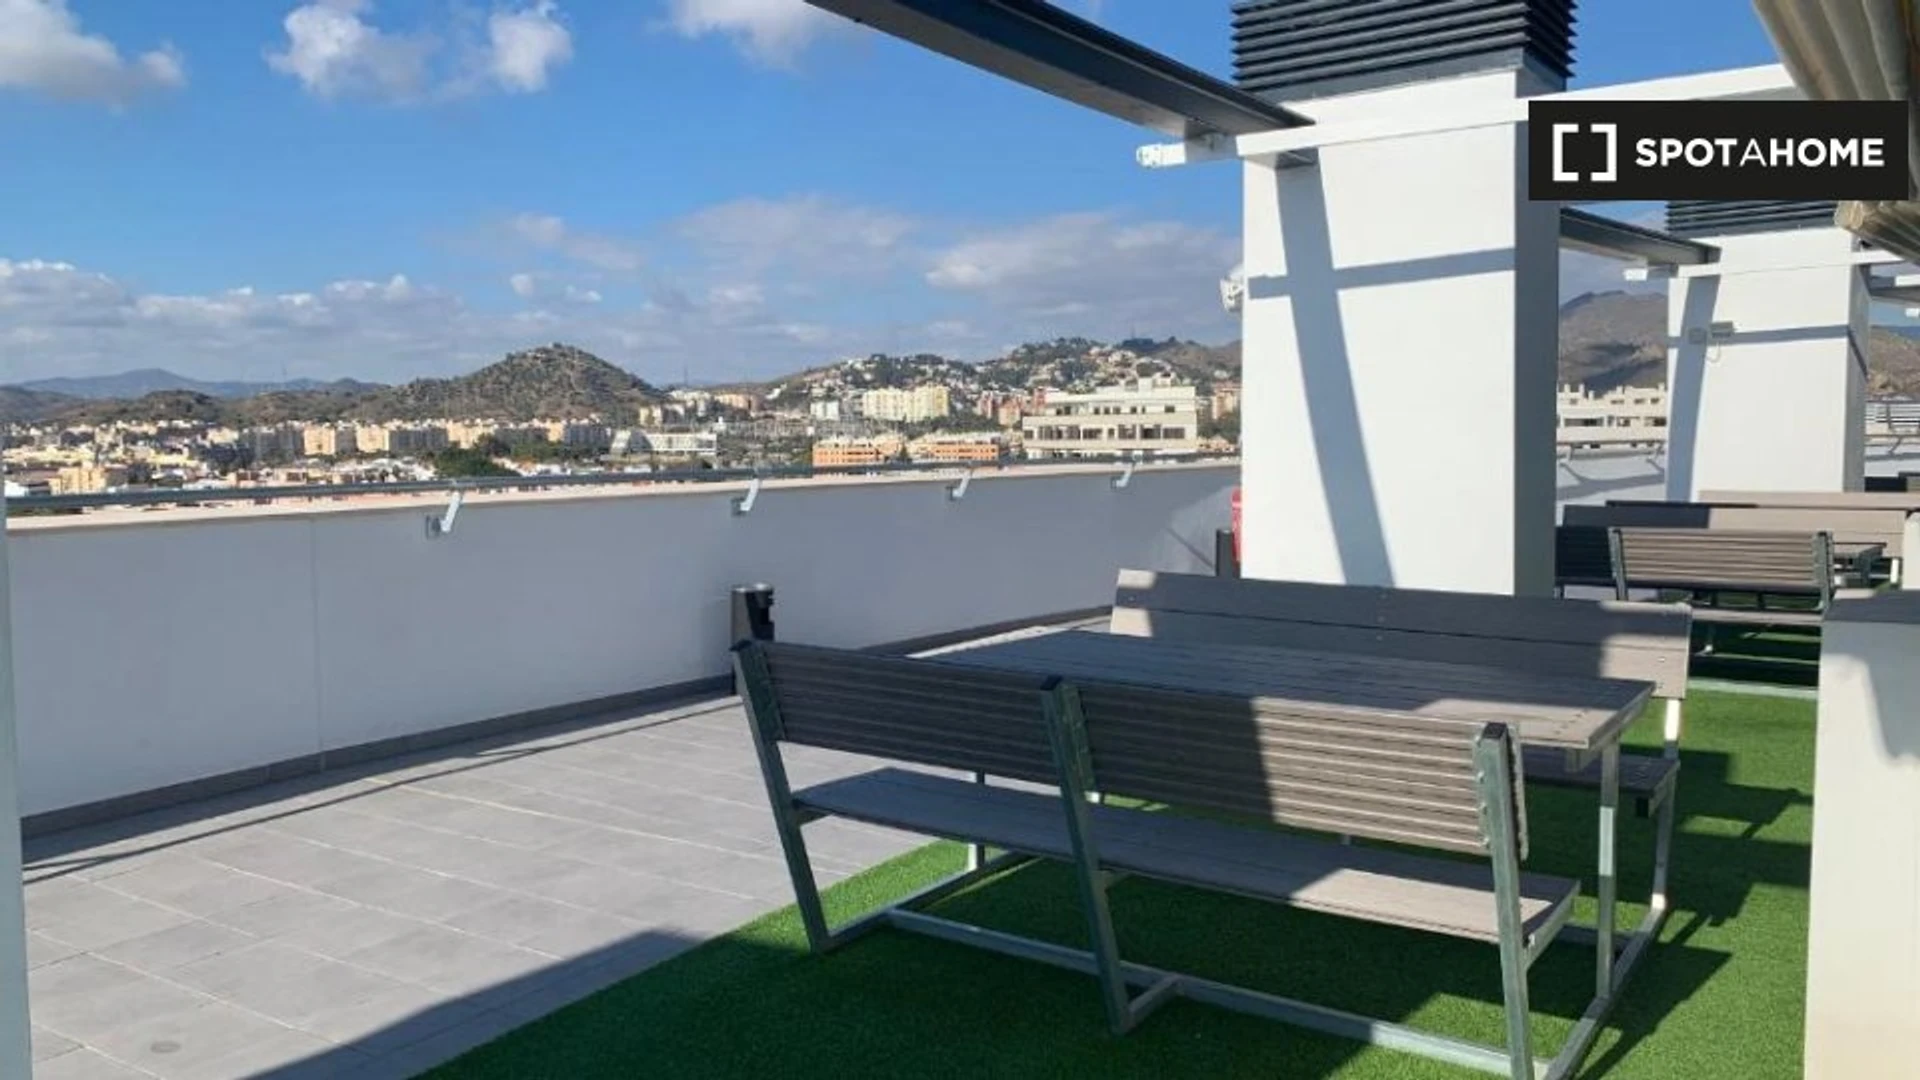 Habitación privada barata en Málaga